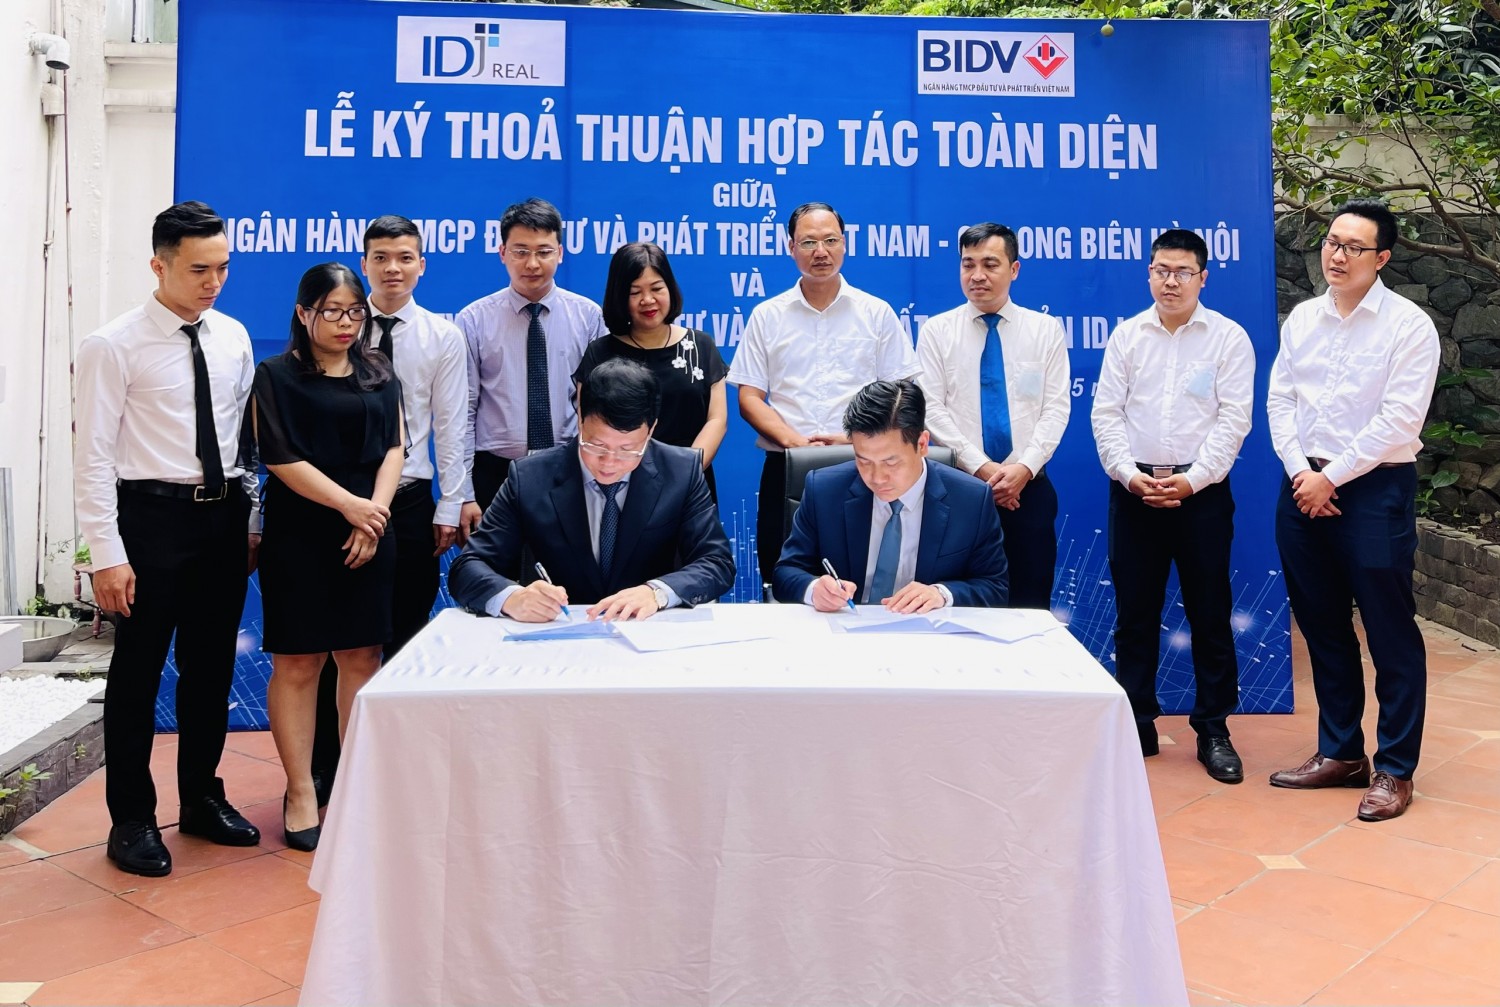 IDJ Real and BIDV sign contract